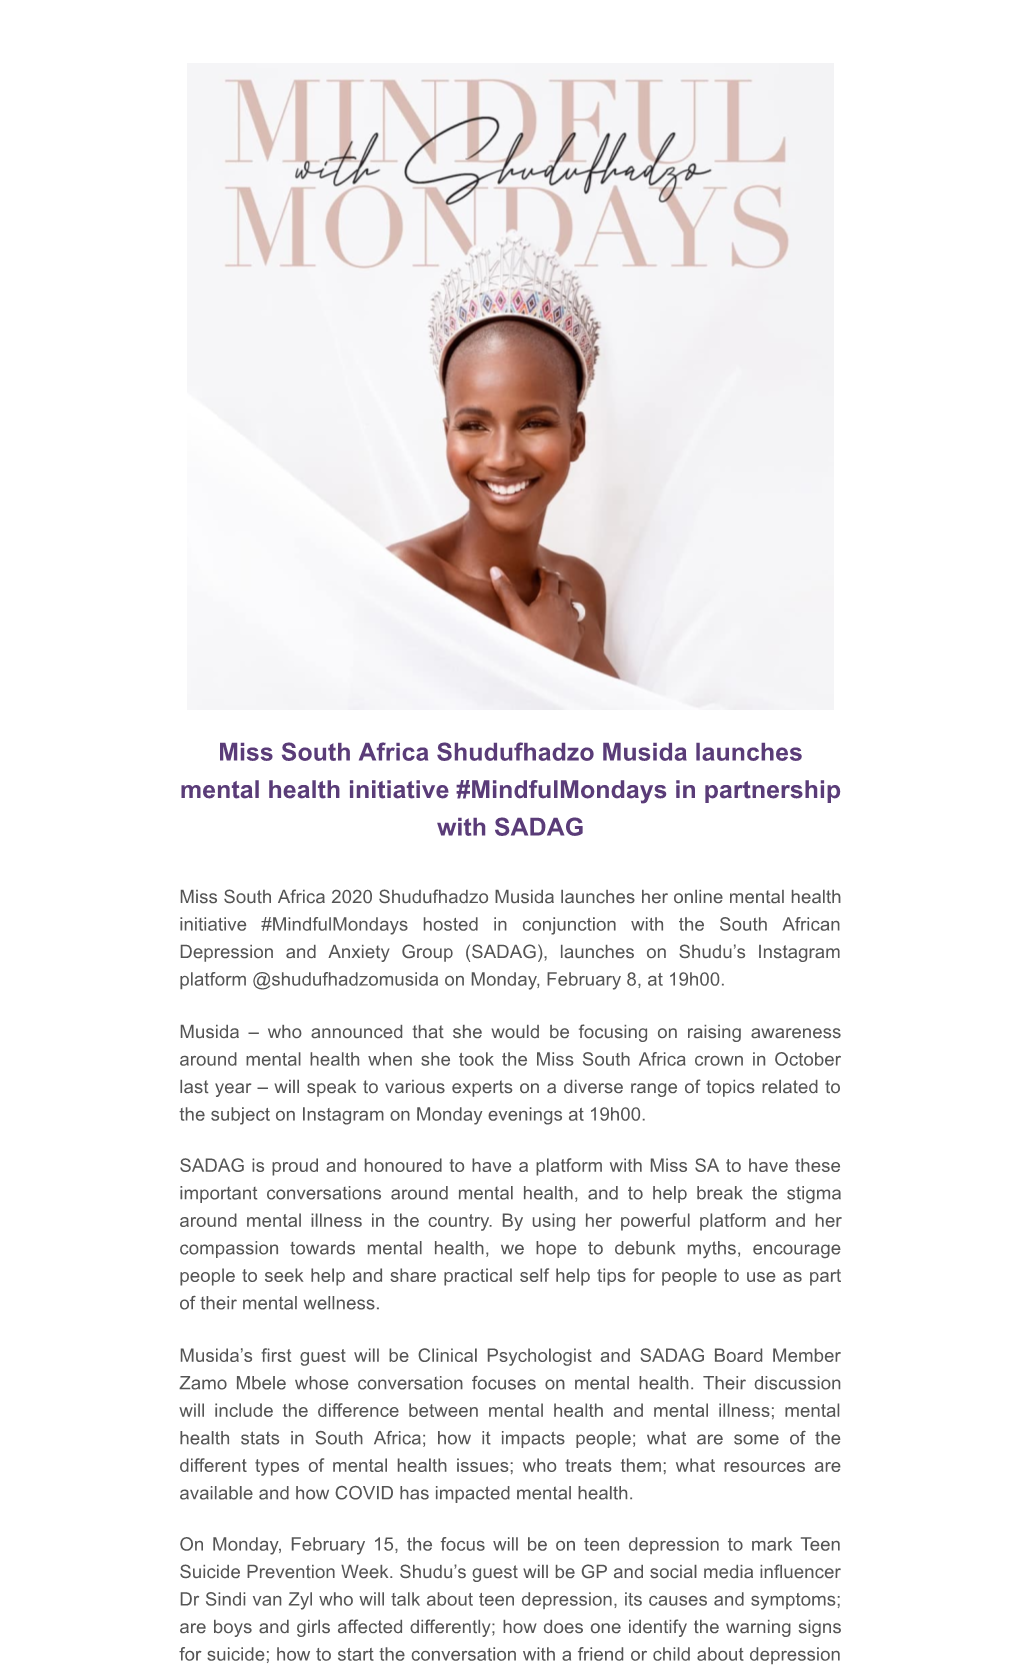 Miss South Africa Shudufhadzo Musida Launches Mental Health Initiative #Mindfulmondays in Partnership with SADAG